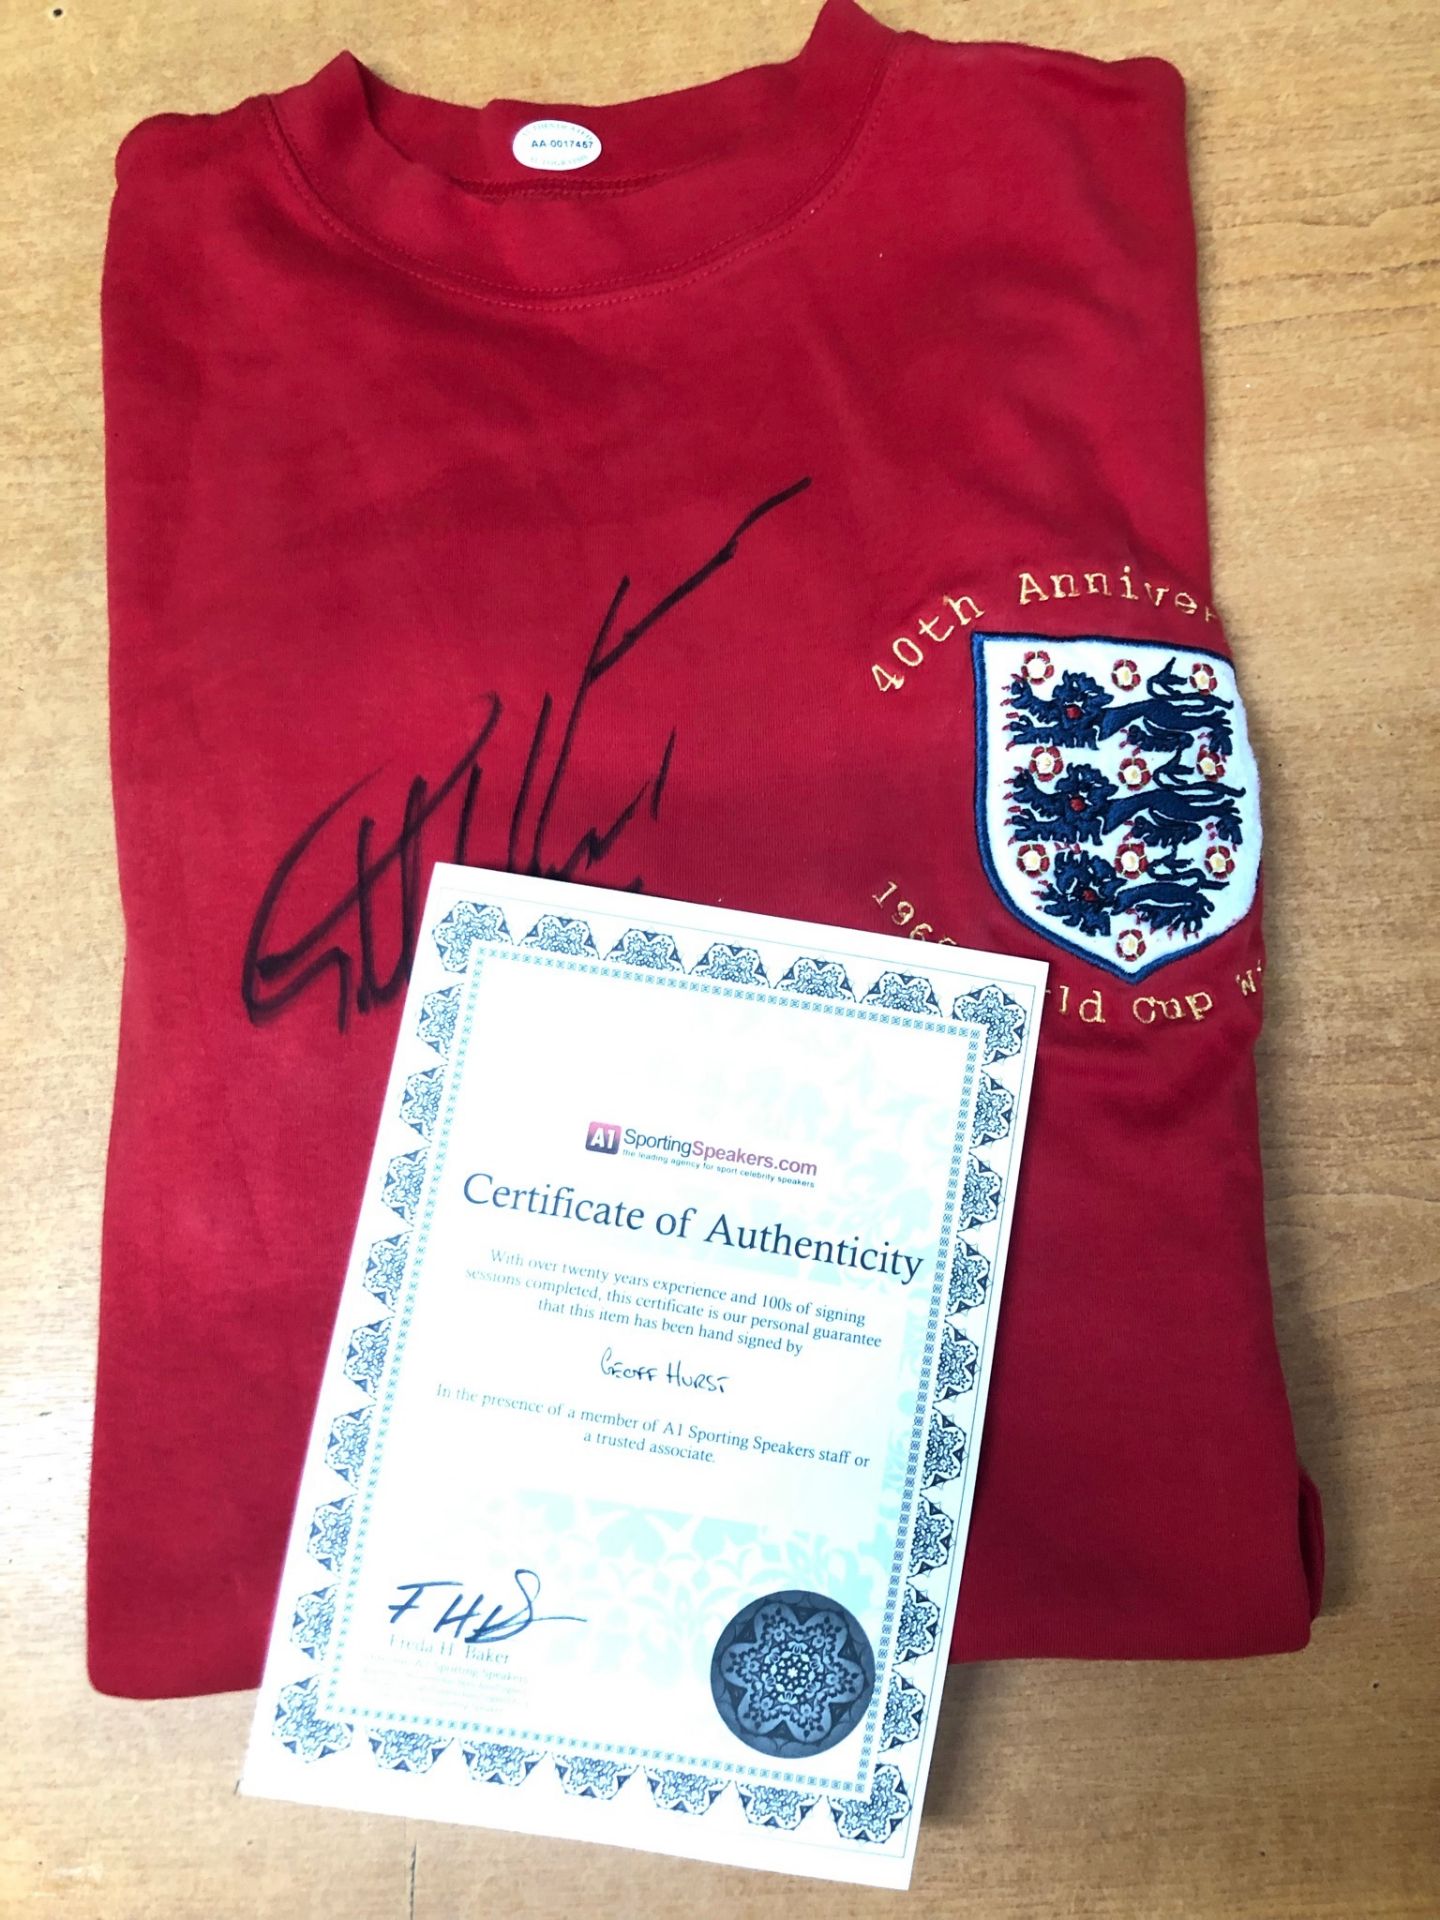 Geoff Hurst Signed Long Sleeve T-shirt - Image 2 of 2